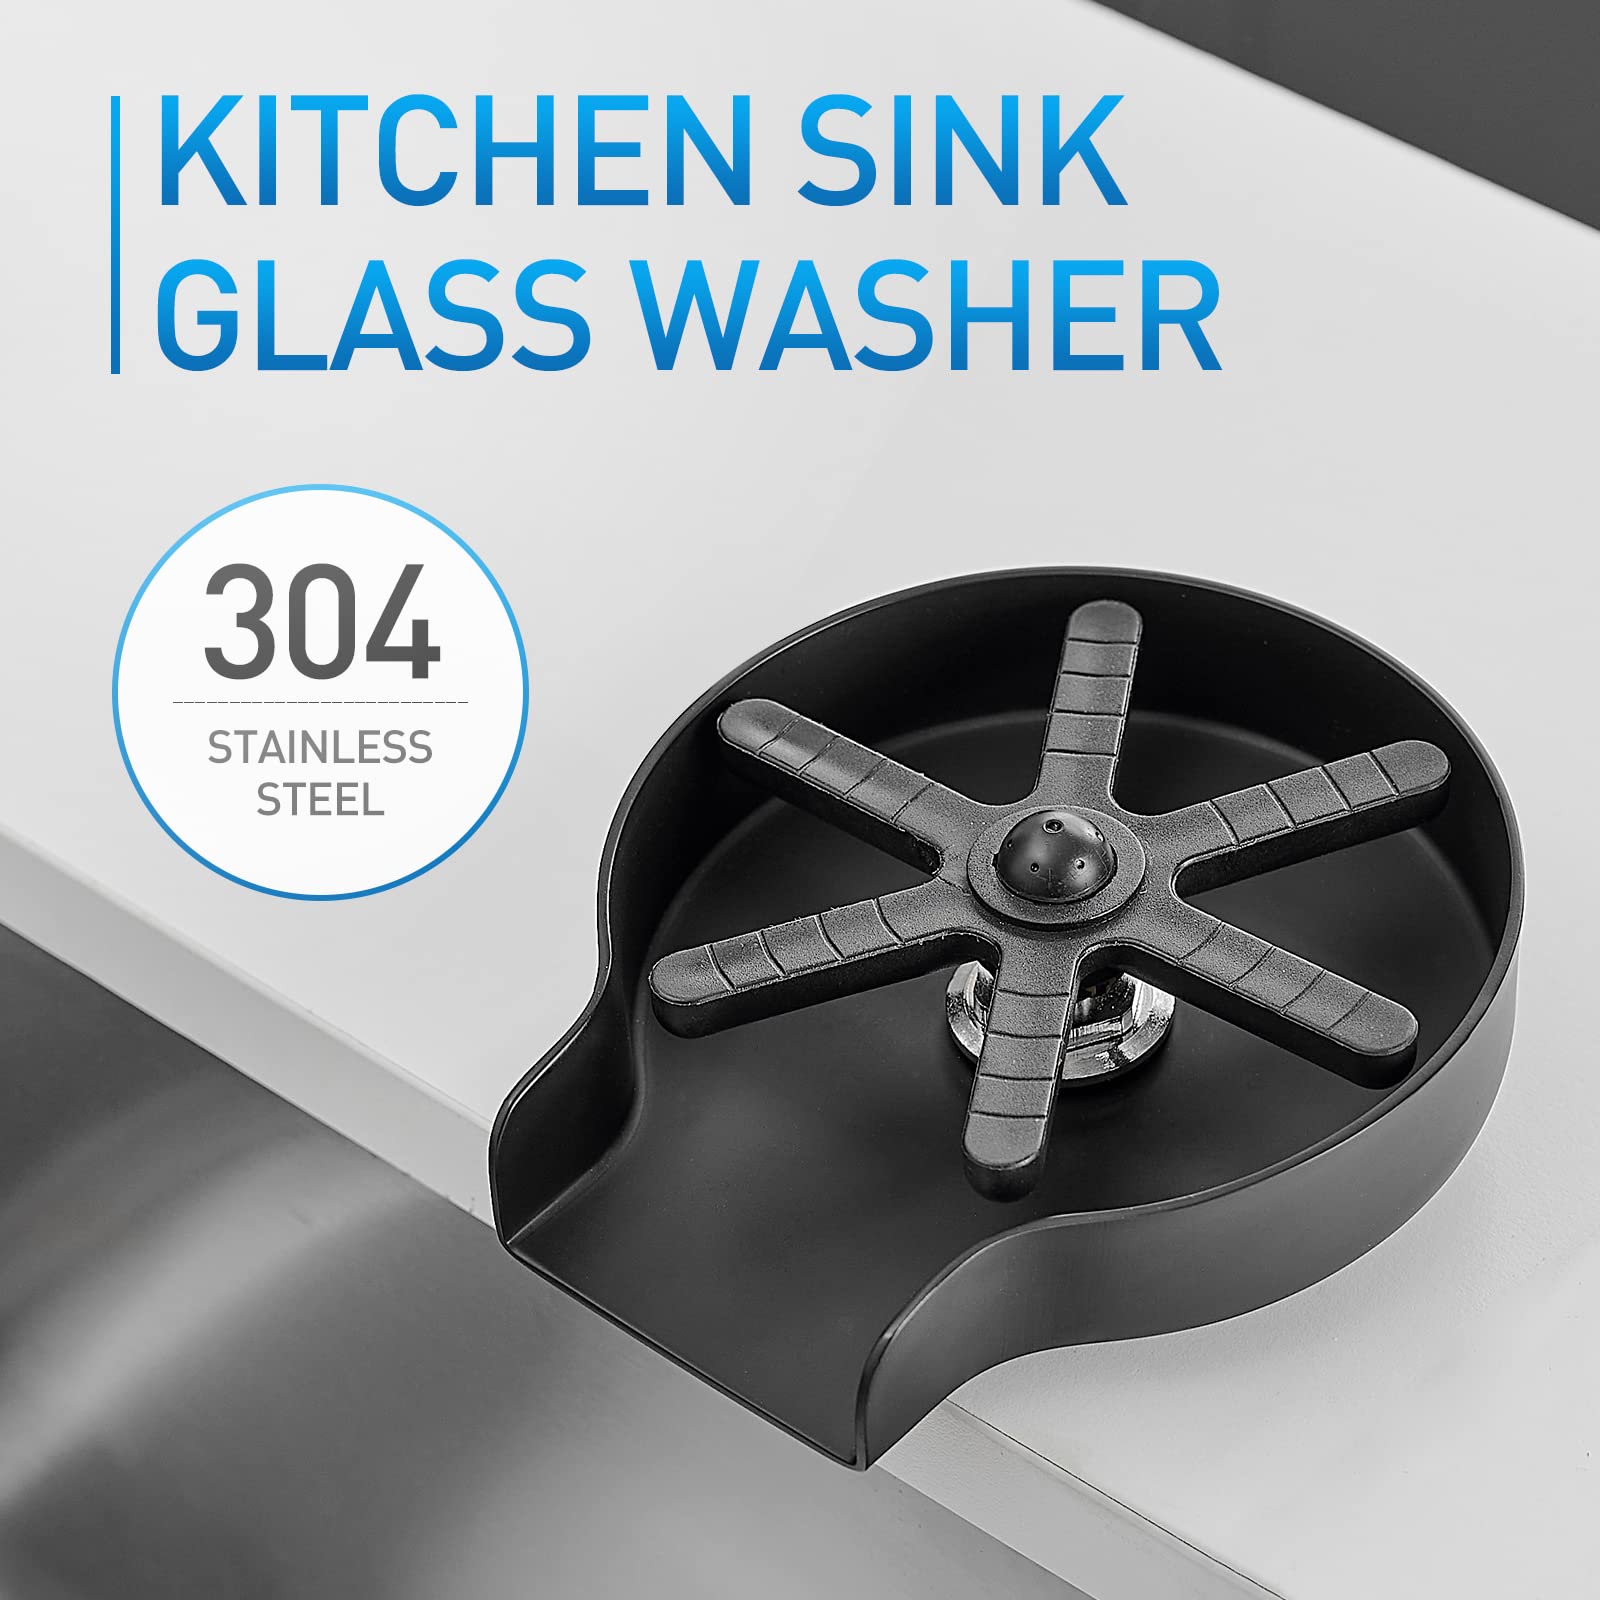 Glass Rinser,Kitchen Sink Glass Rinser,304 Stainless Steel Sink Cup Washer,Glass Washer,Black